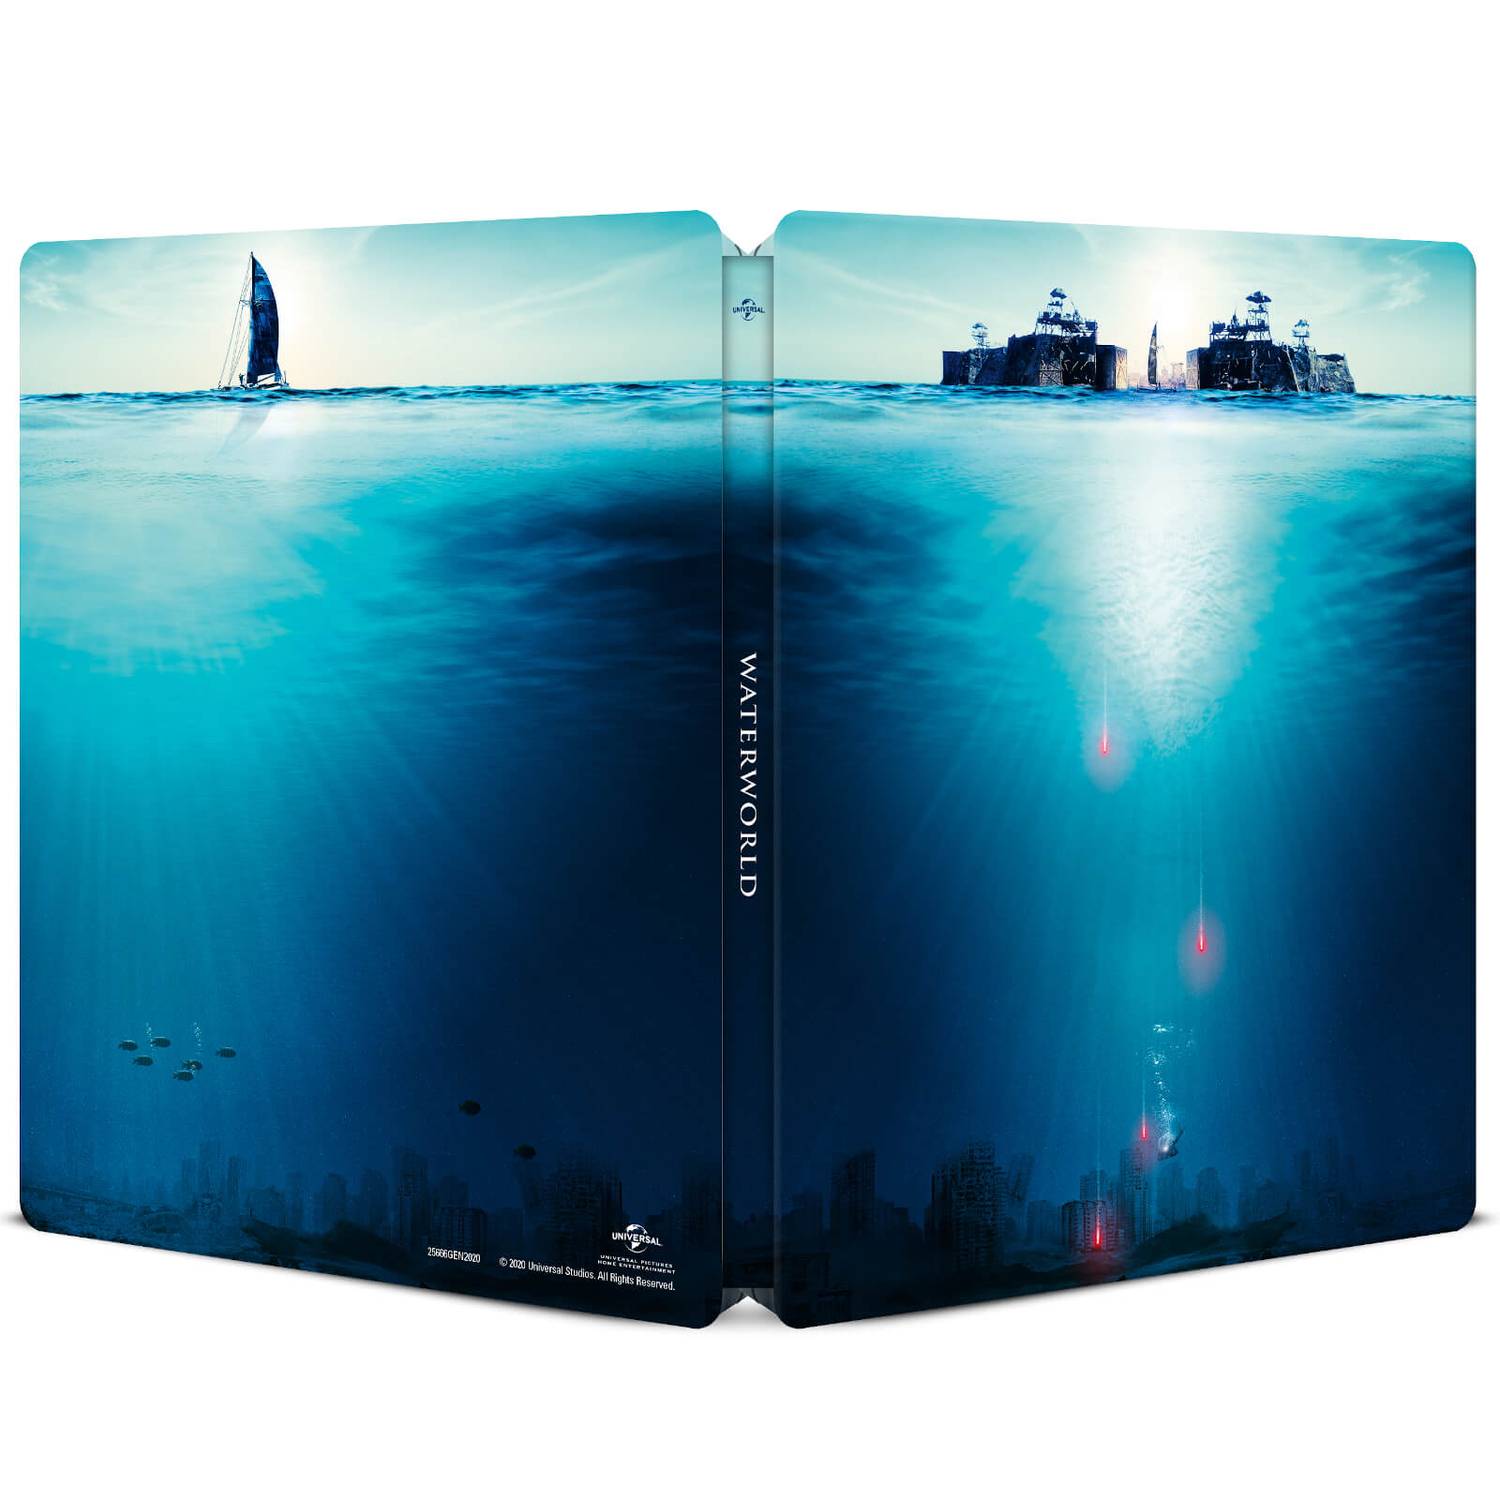 Водный мир (4K UHD + Blu-ray) Steelbook